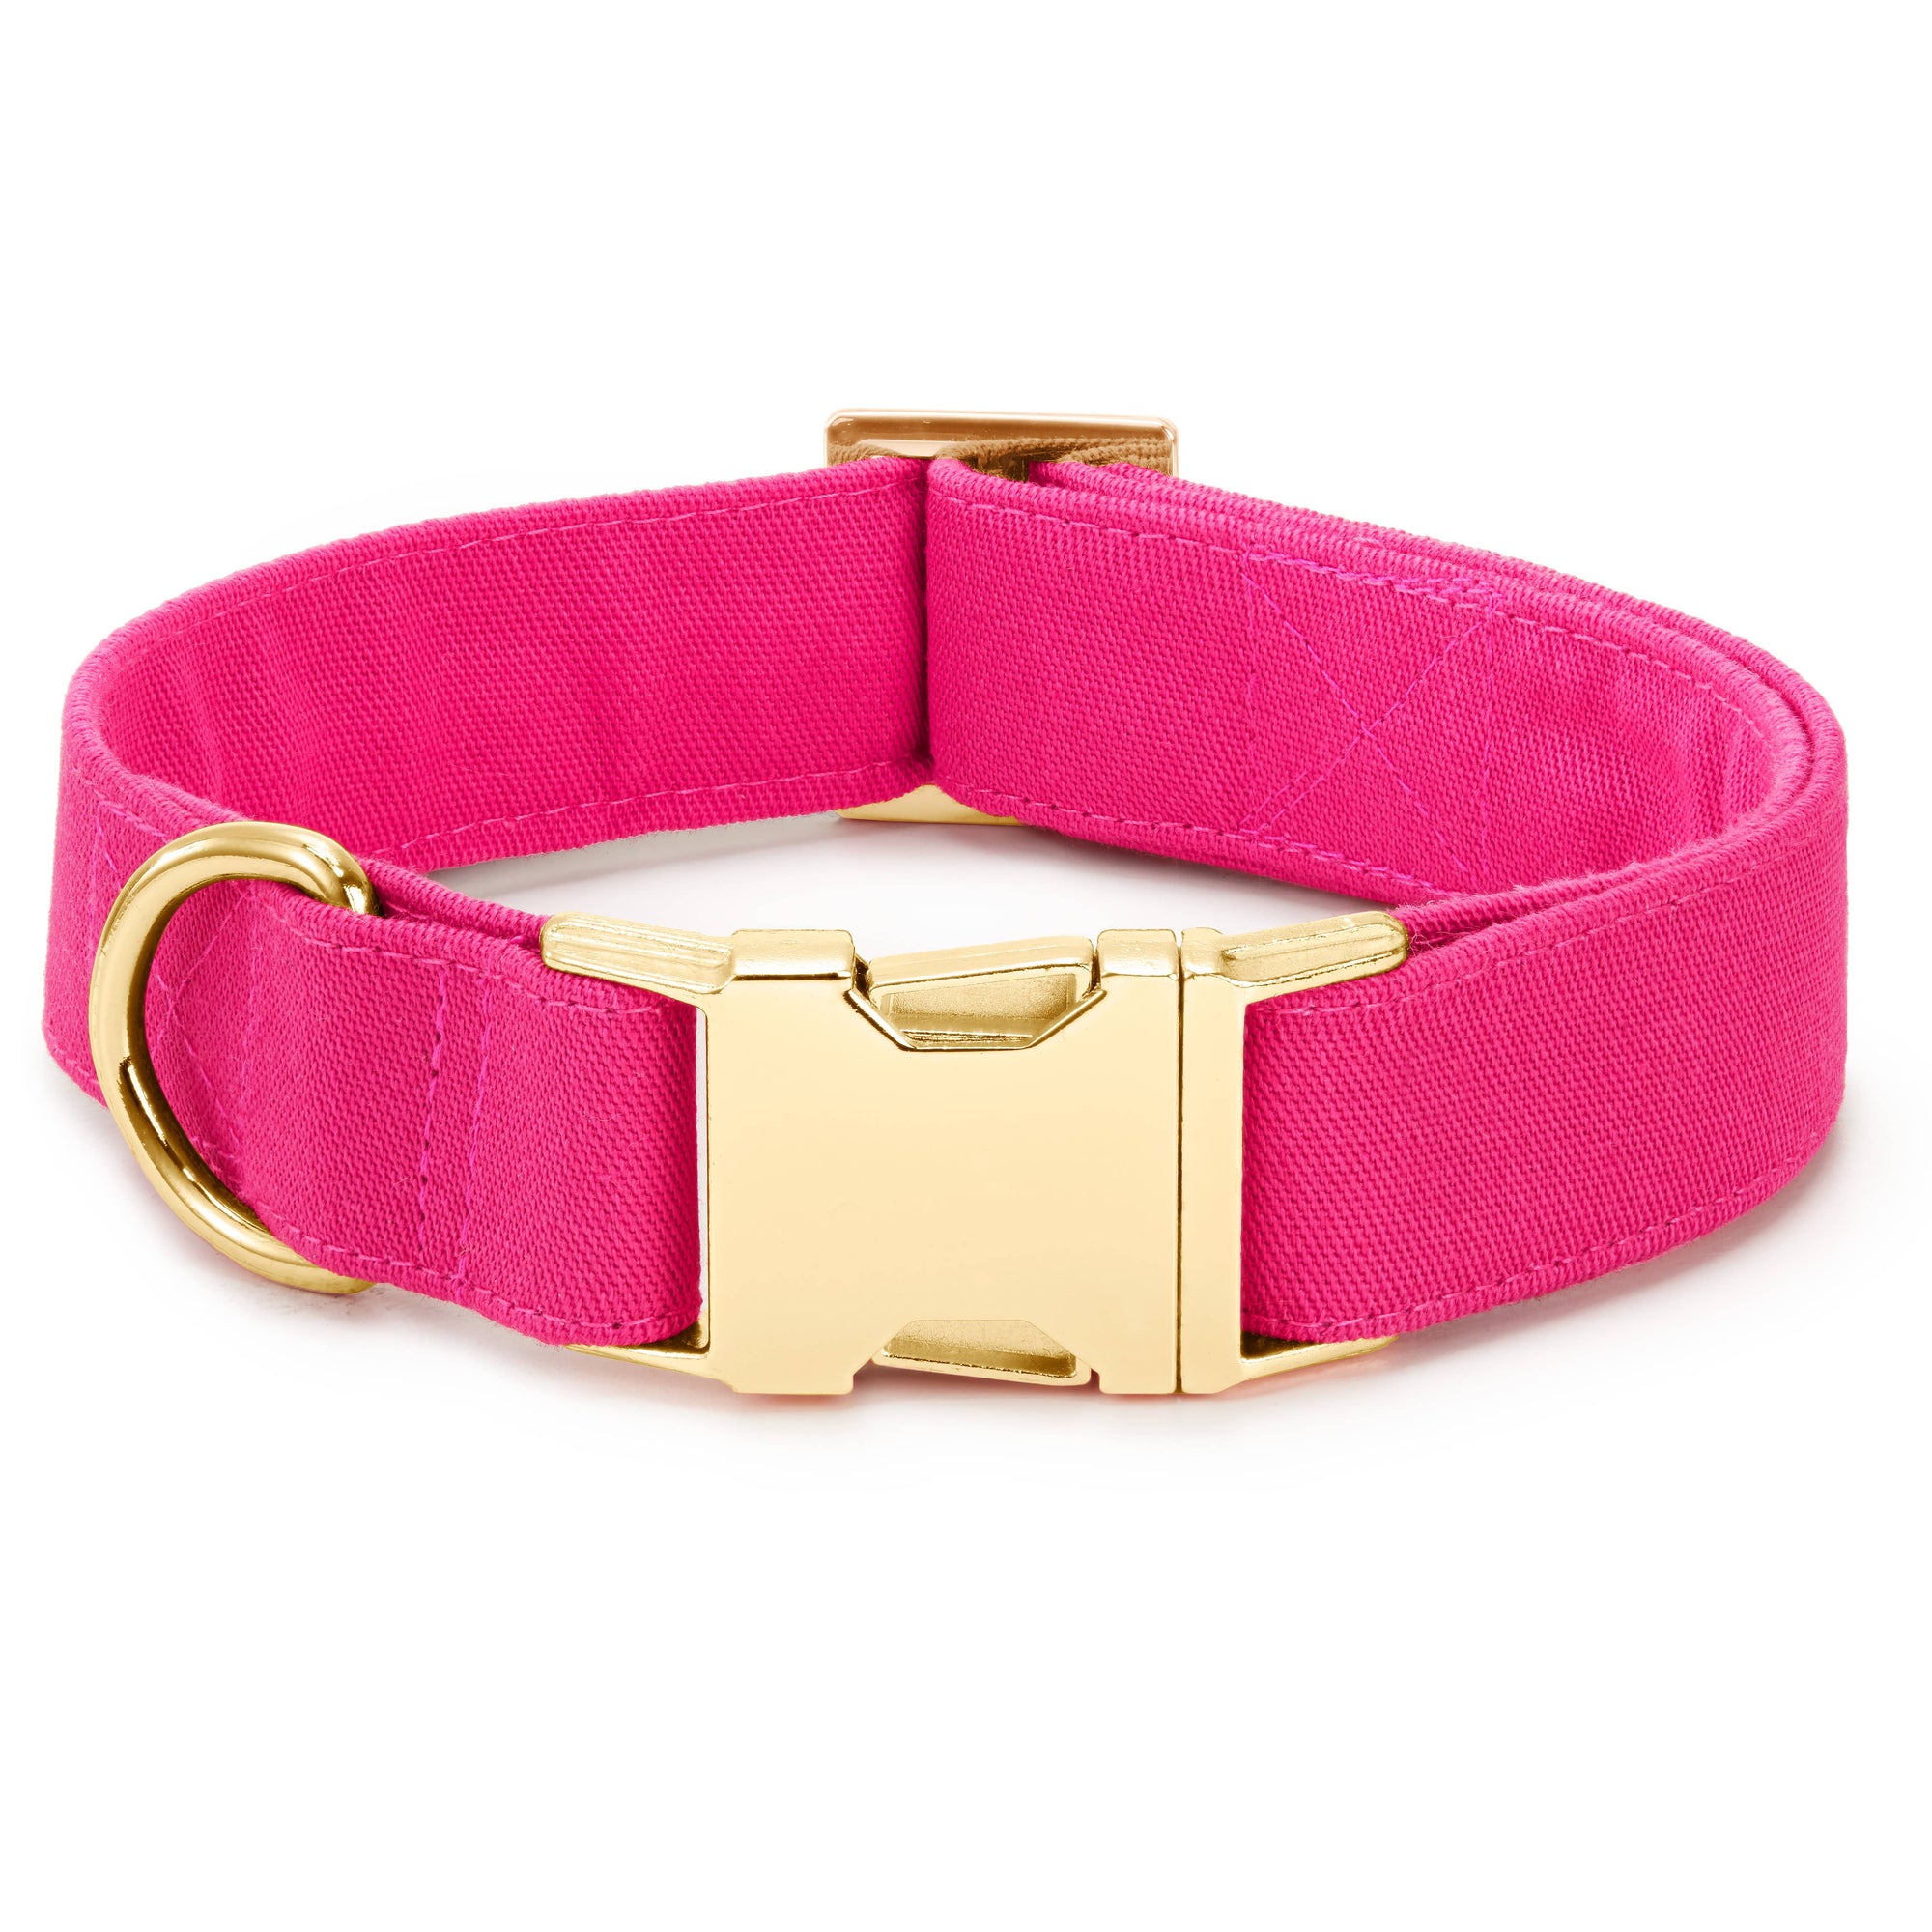 Hot Pink Dog Collar: L / Gold